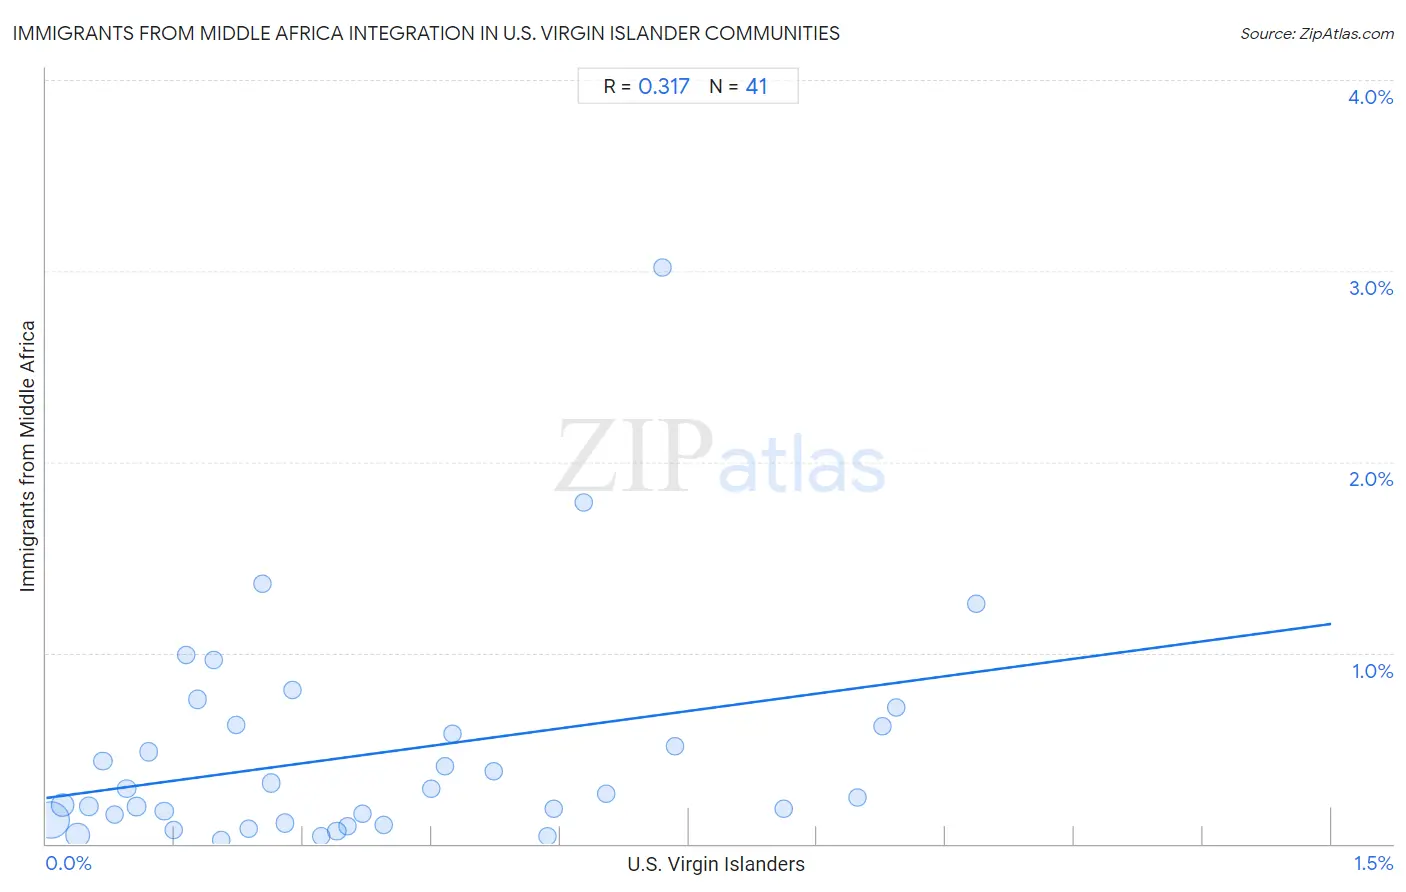 U.S. Virgin Islander Integration in Immigrants from Middle Africa Communities